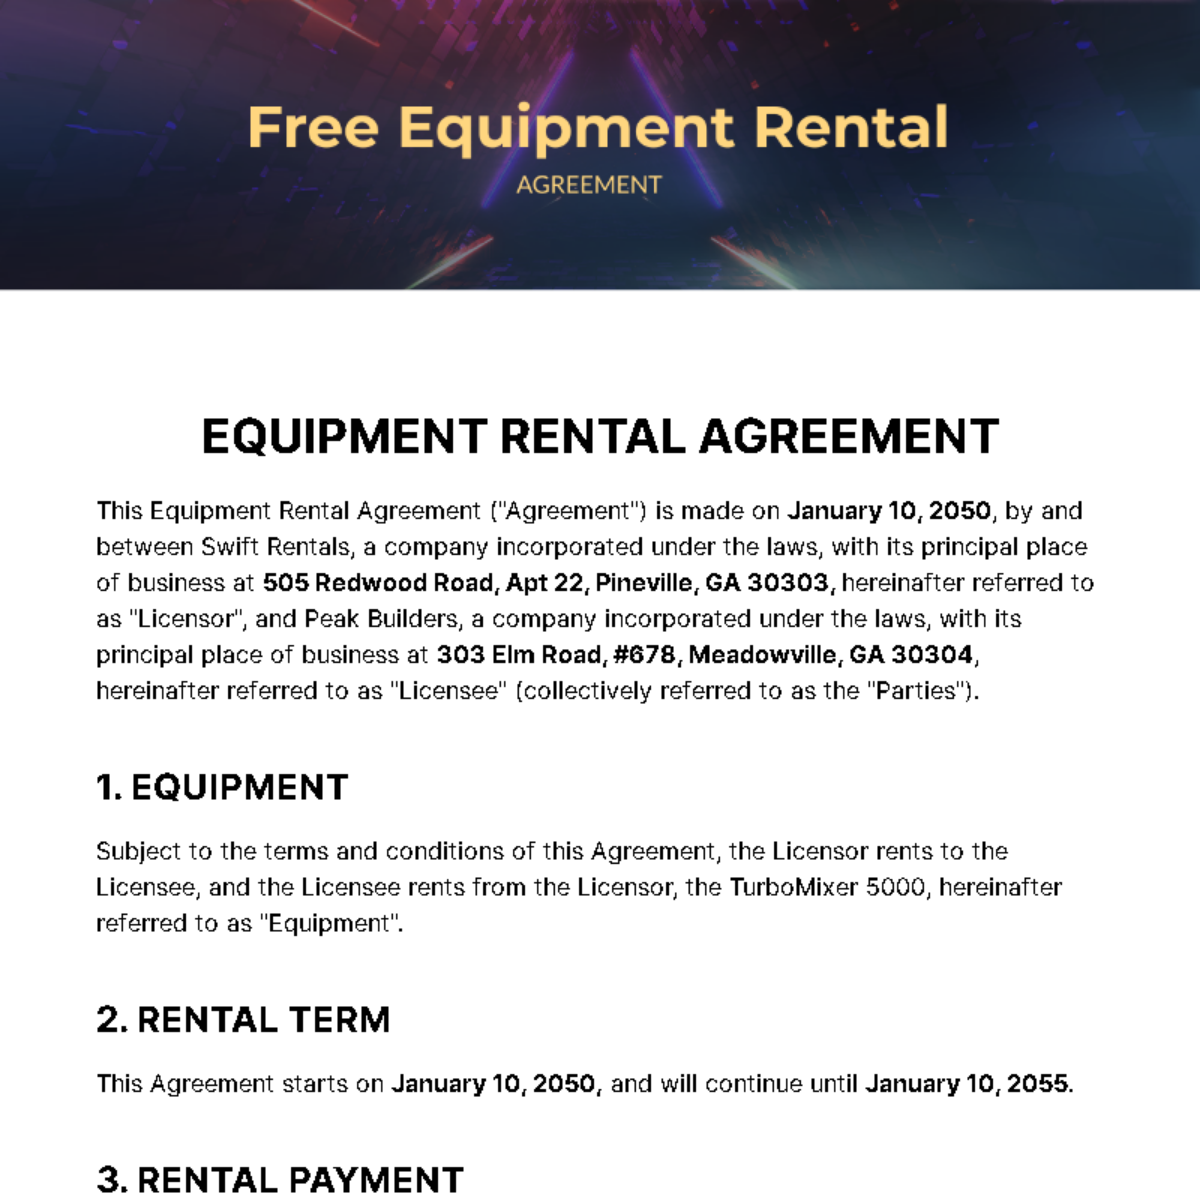 Free Equipment Rental Agreement Template